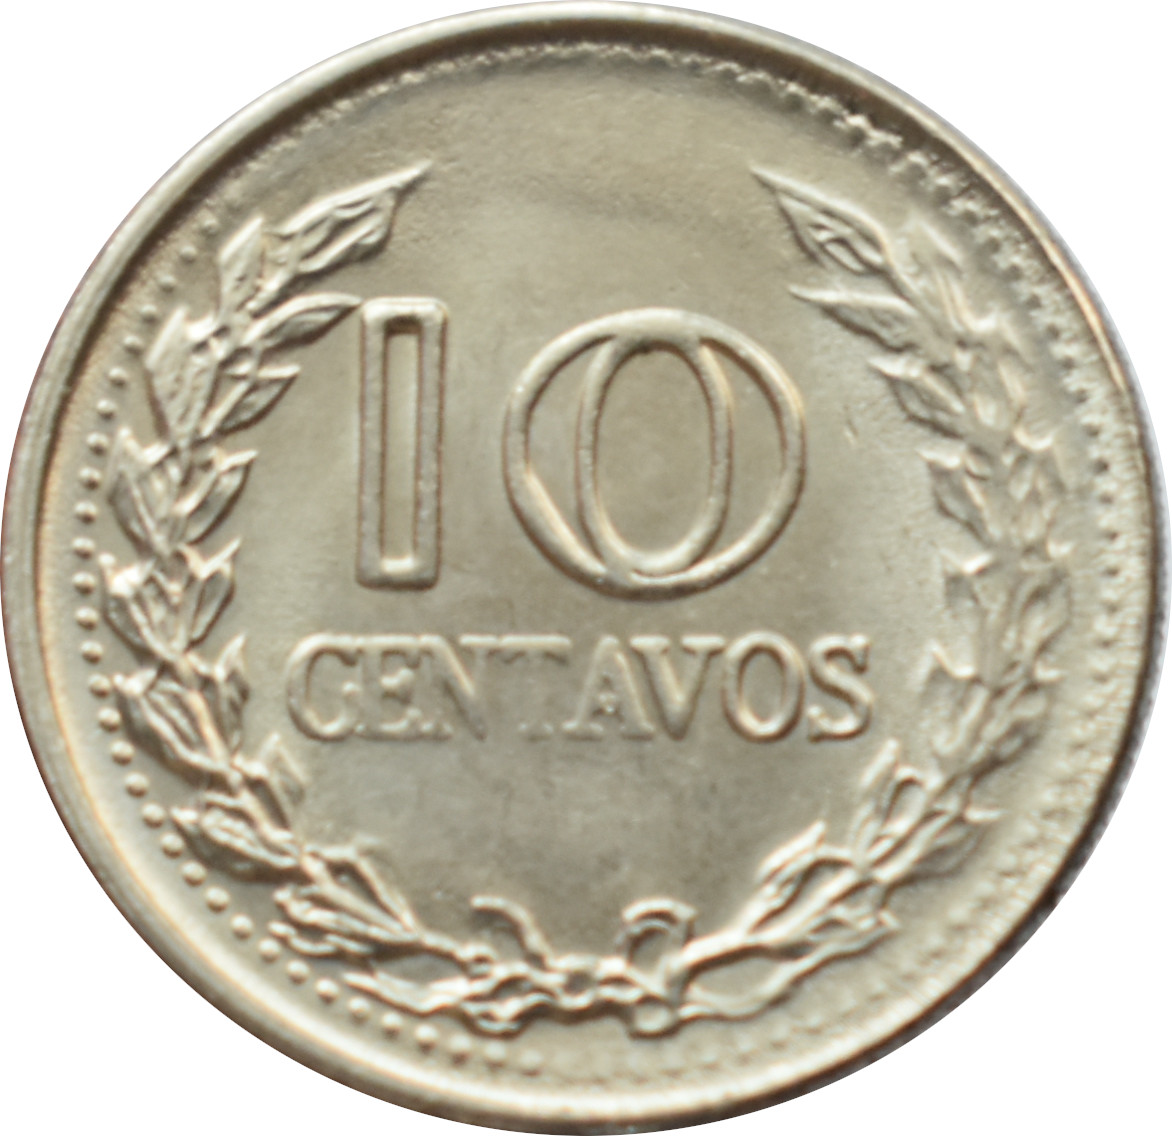 Kolumbia 10 Centavos 1969